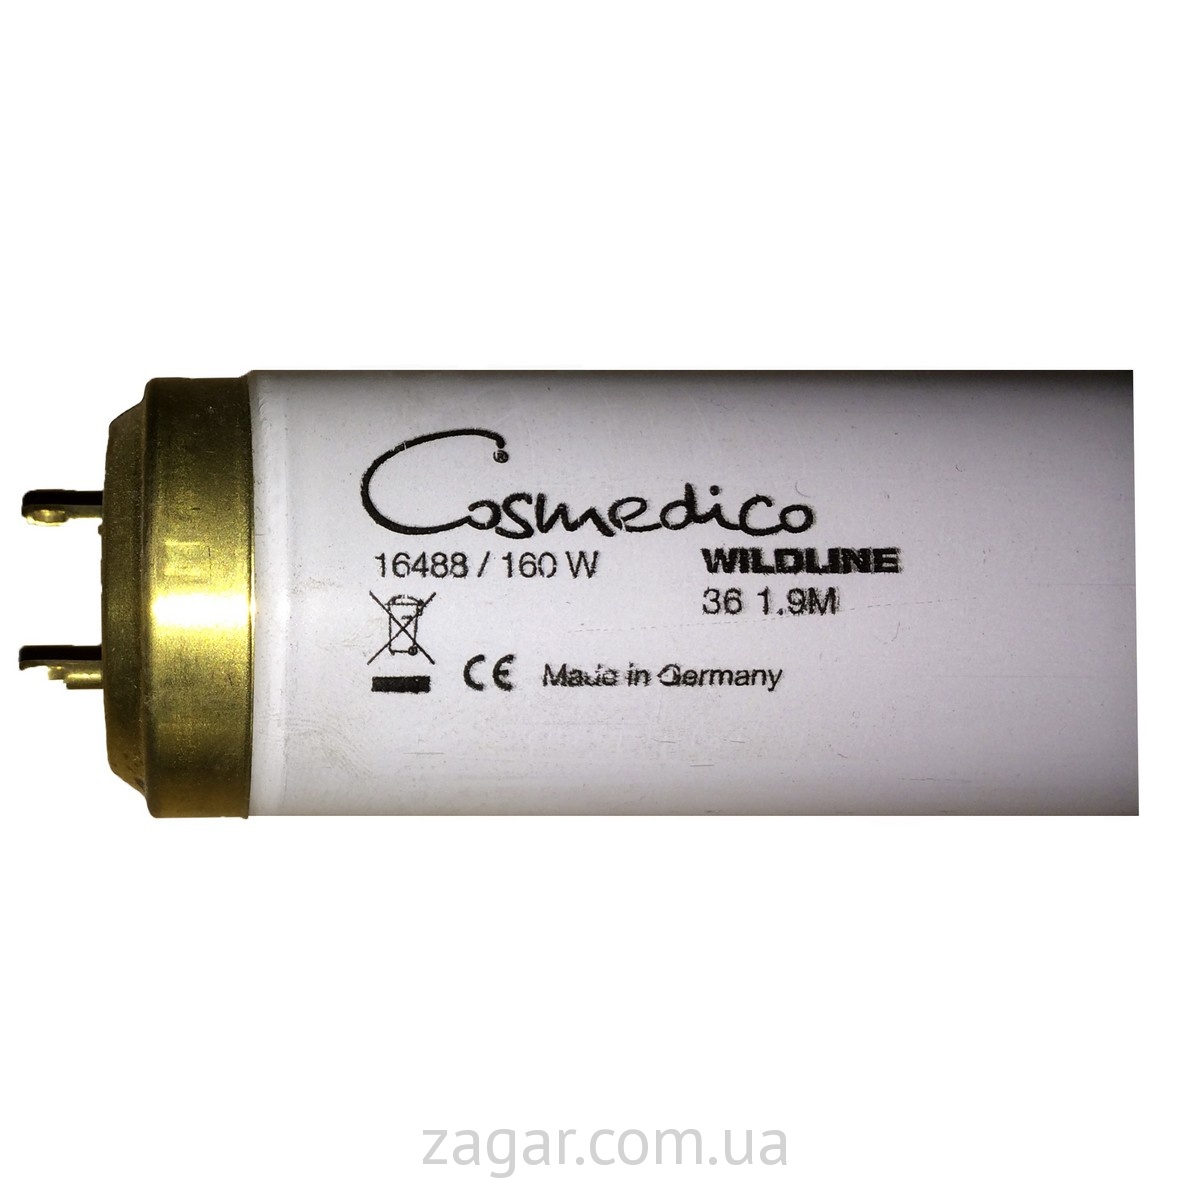 Cosmedico Wildeline 3,6% 160W 1900mm 800h 